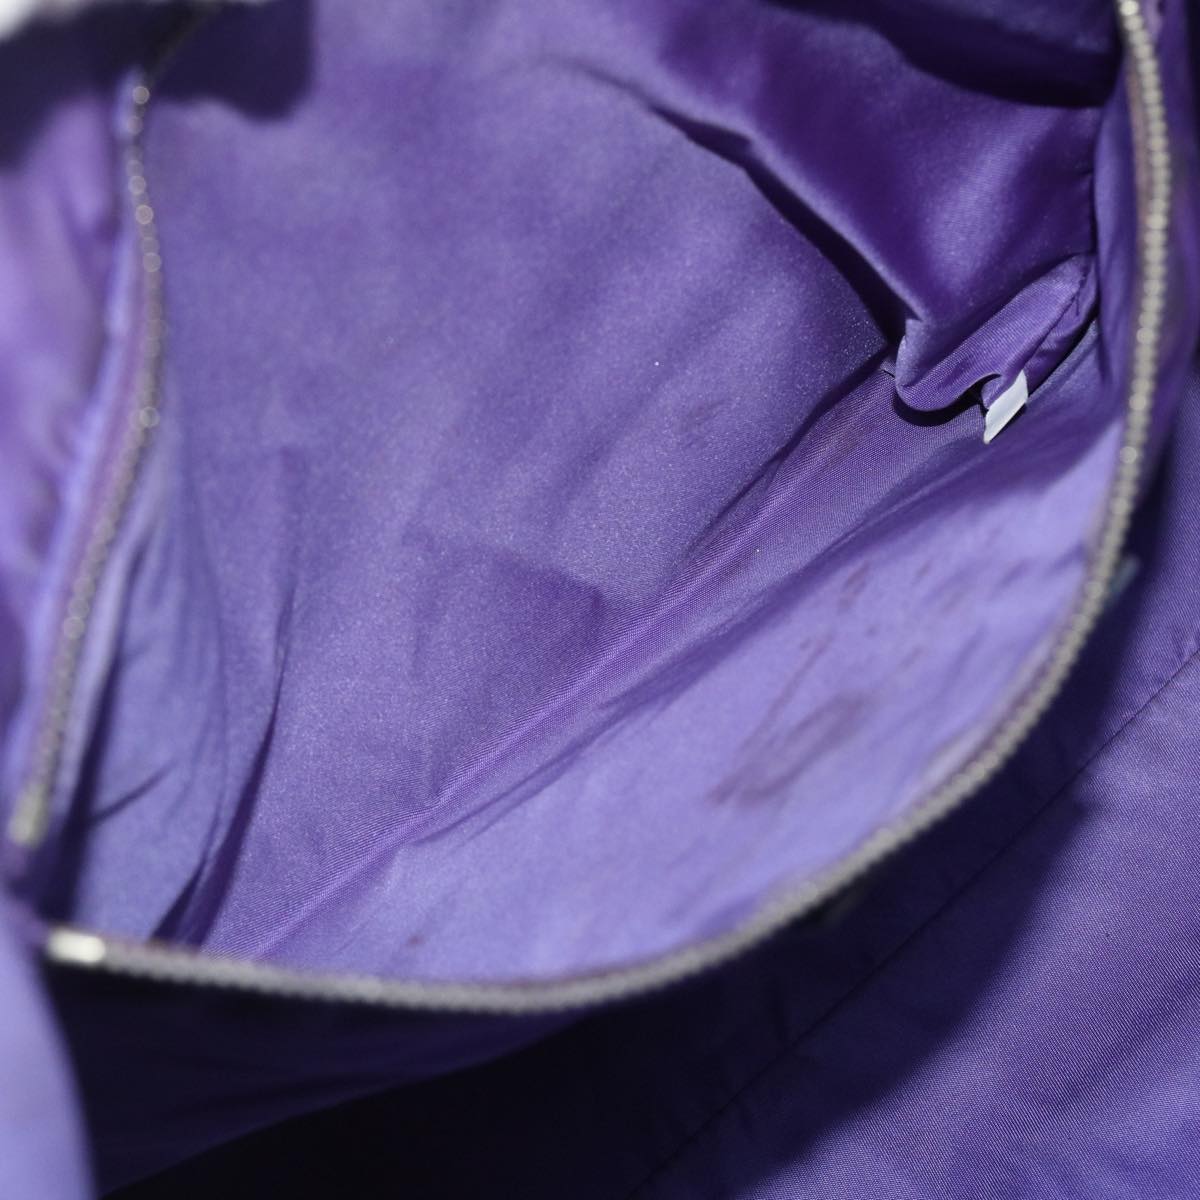 PRADA Tote Bag Nylon Purple Auth 52006